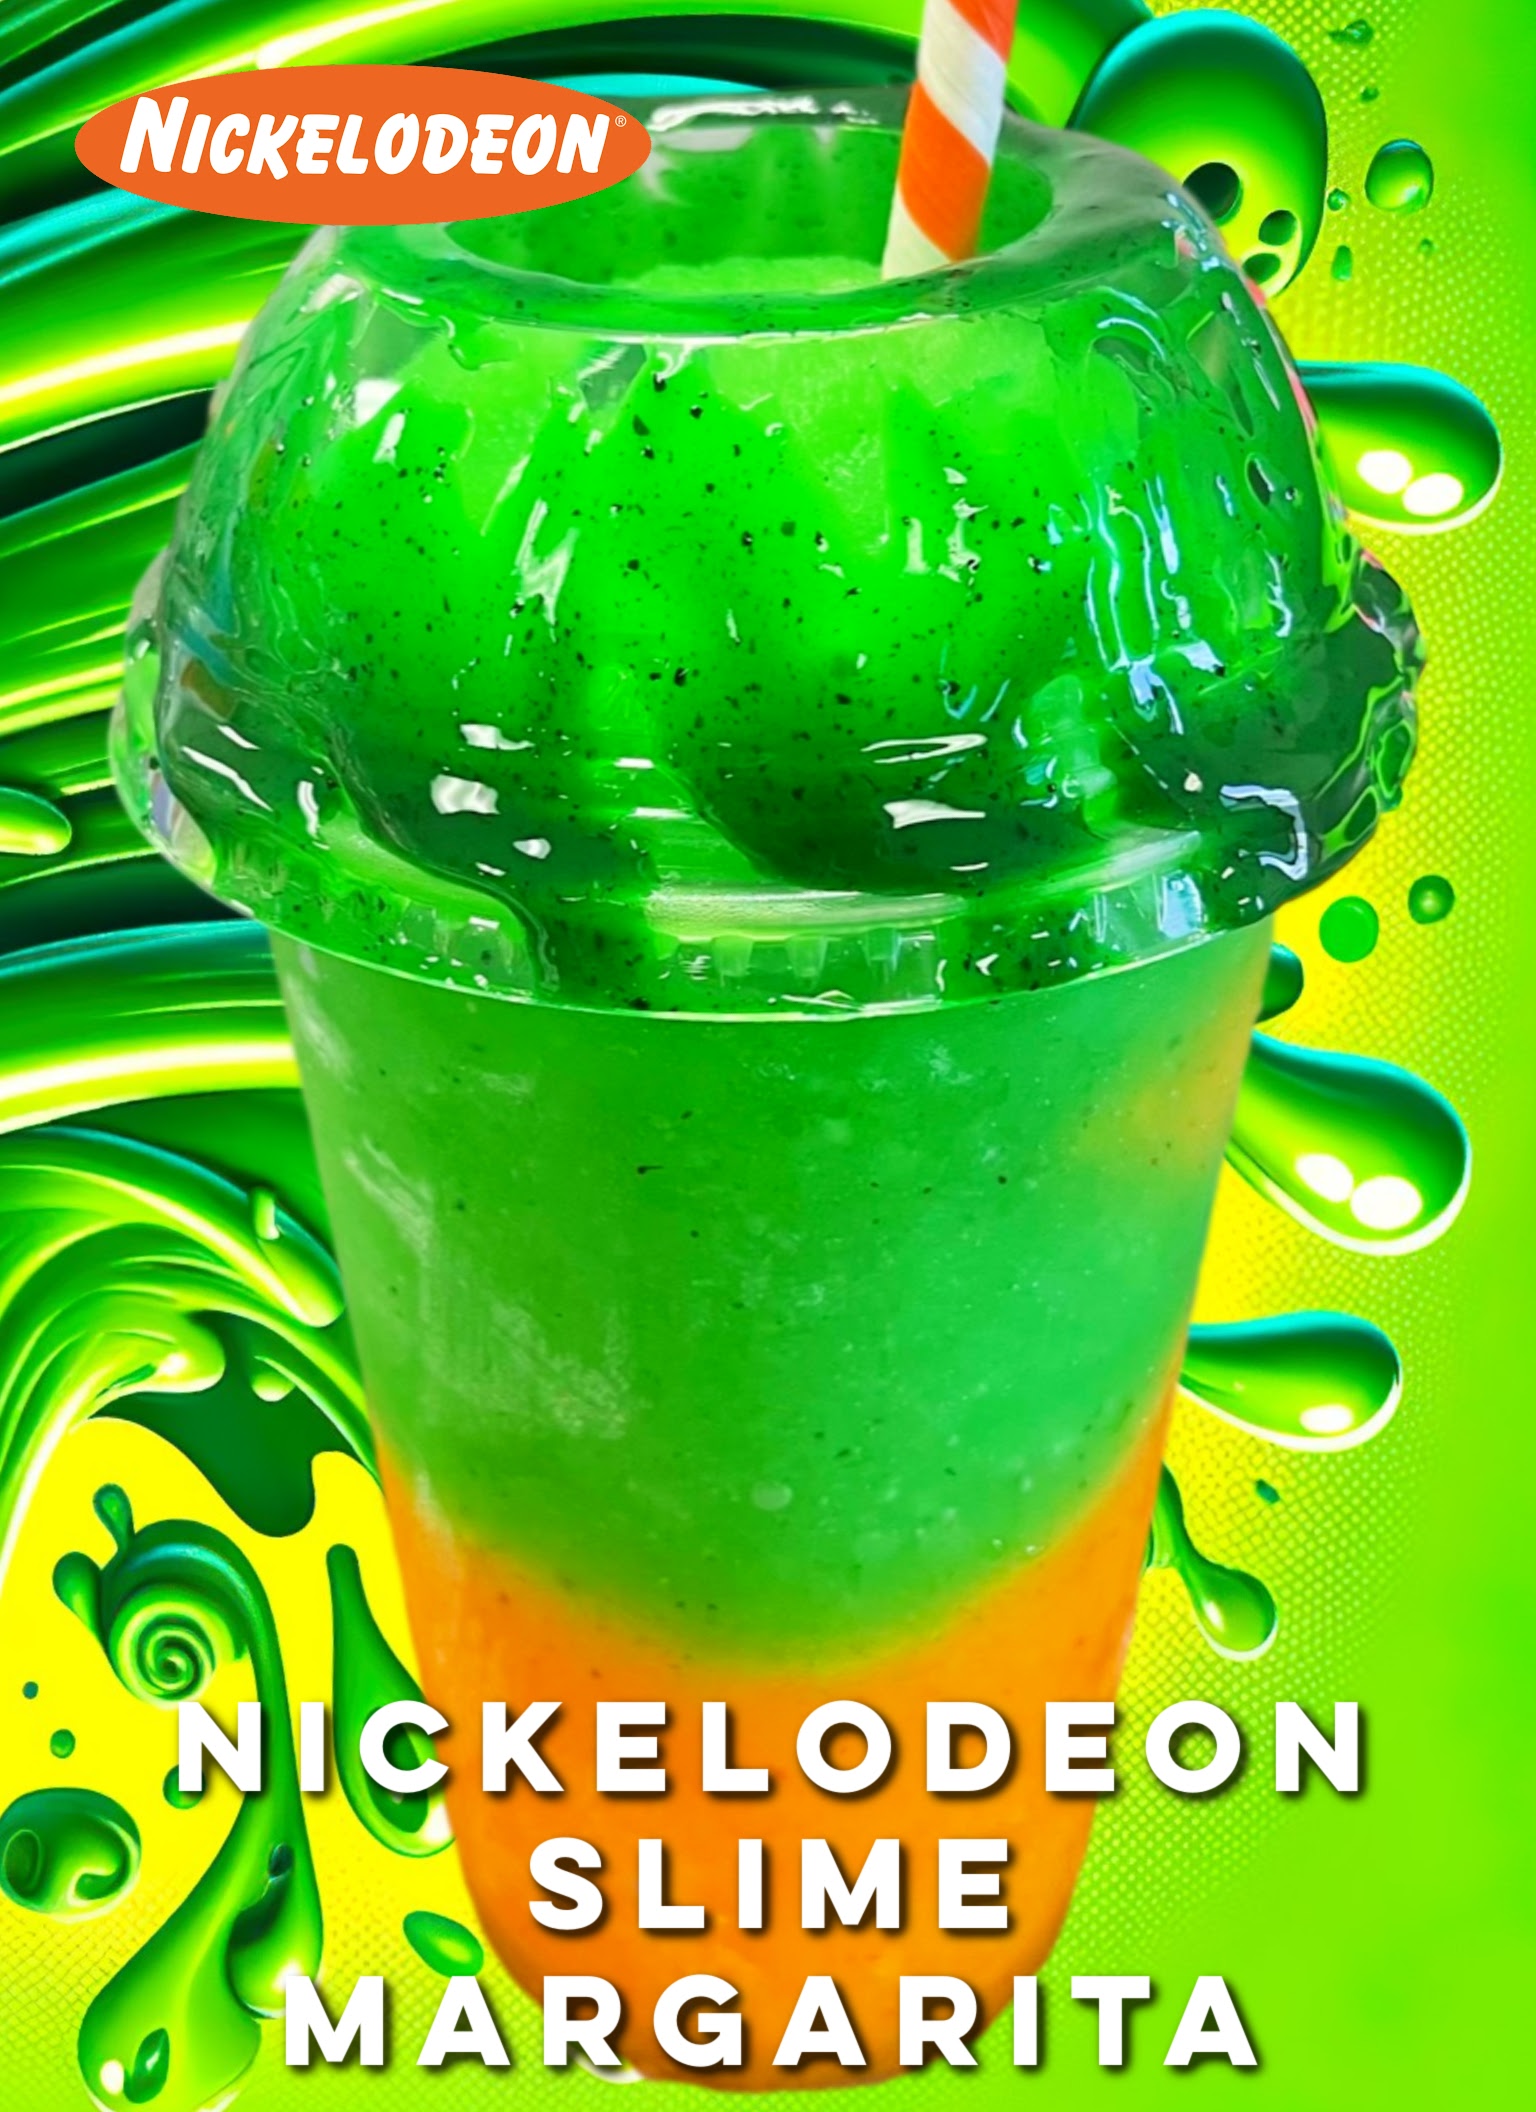 Nickelodeon Slime Margarita